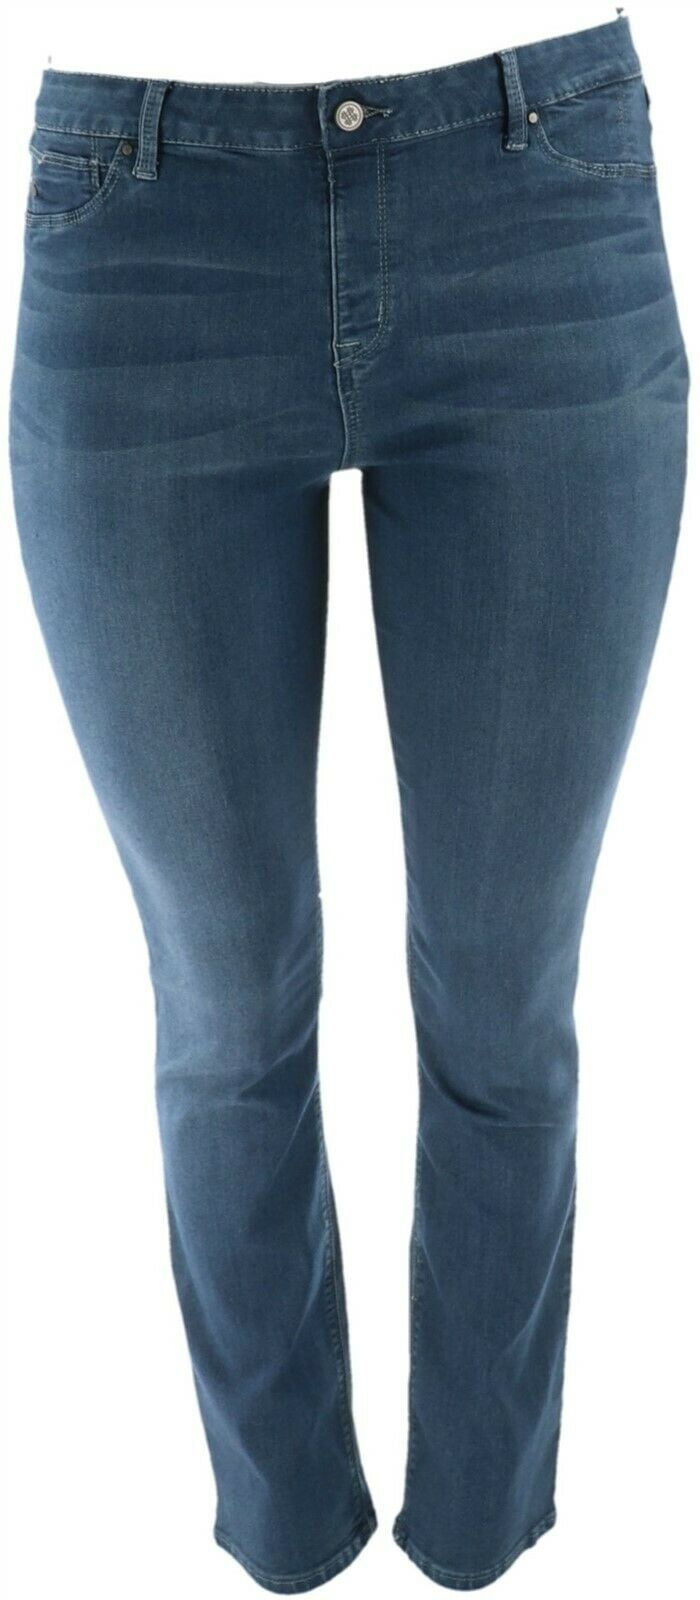 Laurie Felt Silky Denim Straight Leg Pull-On Jeans Women's A346615 ...